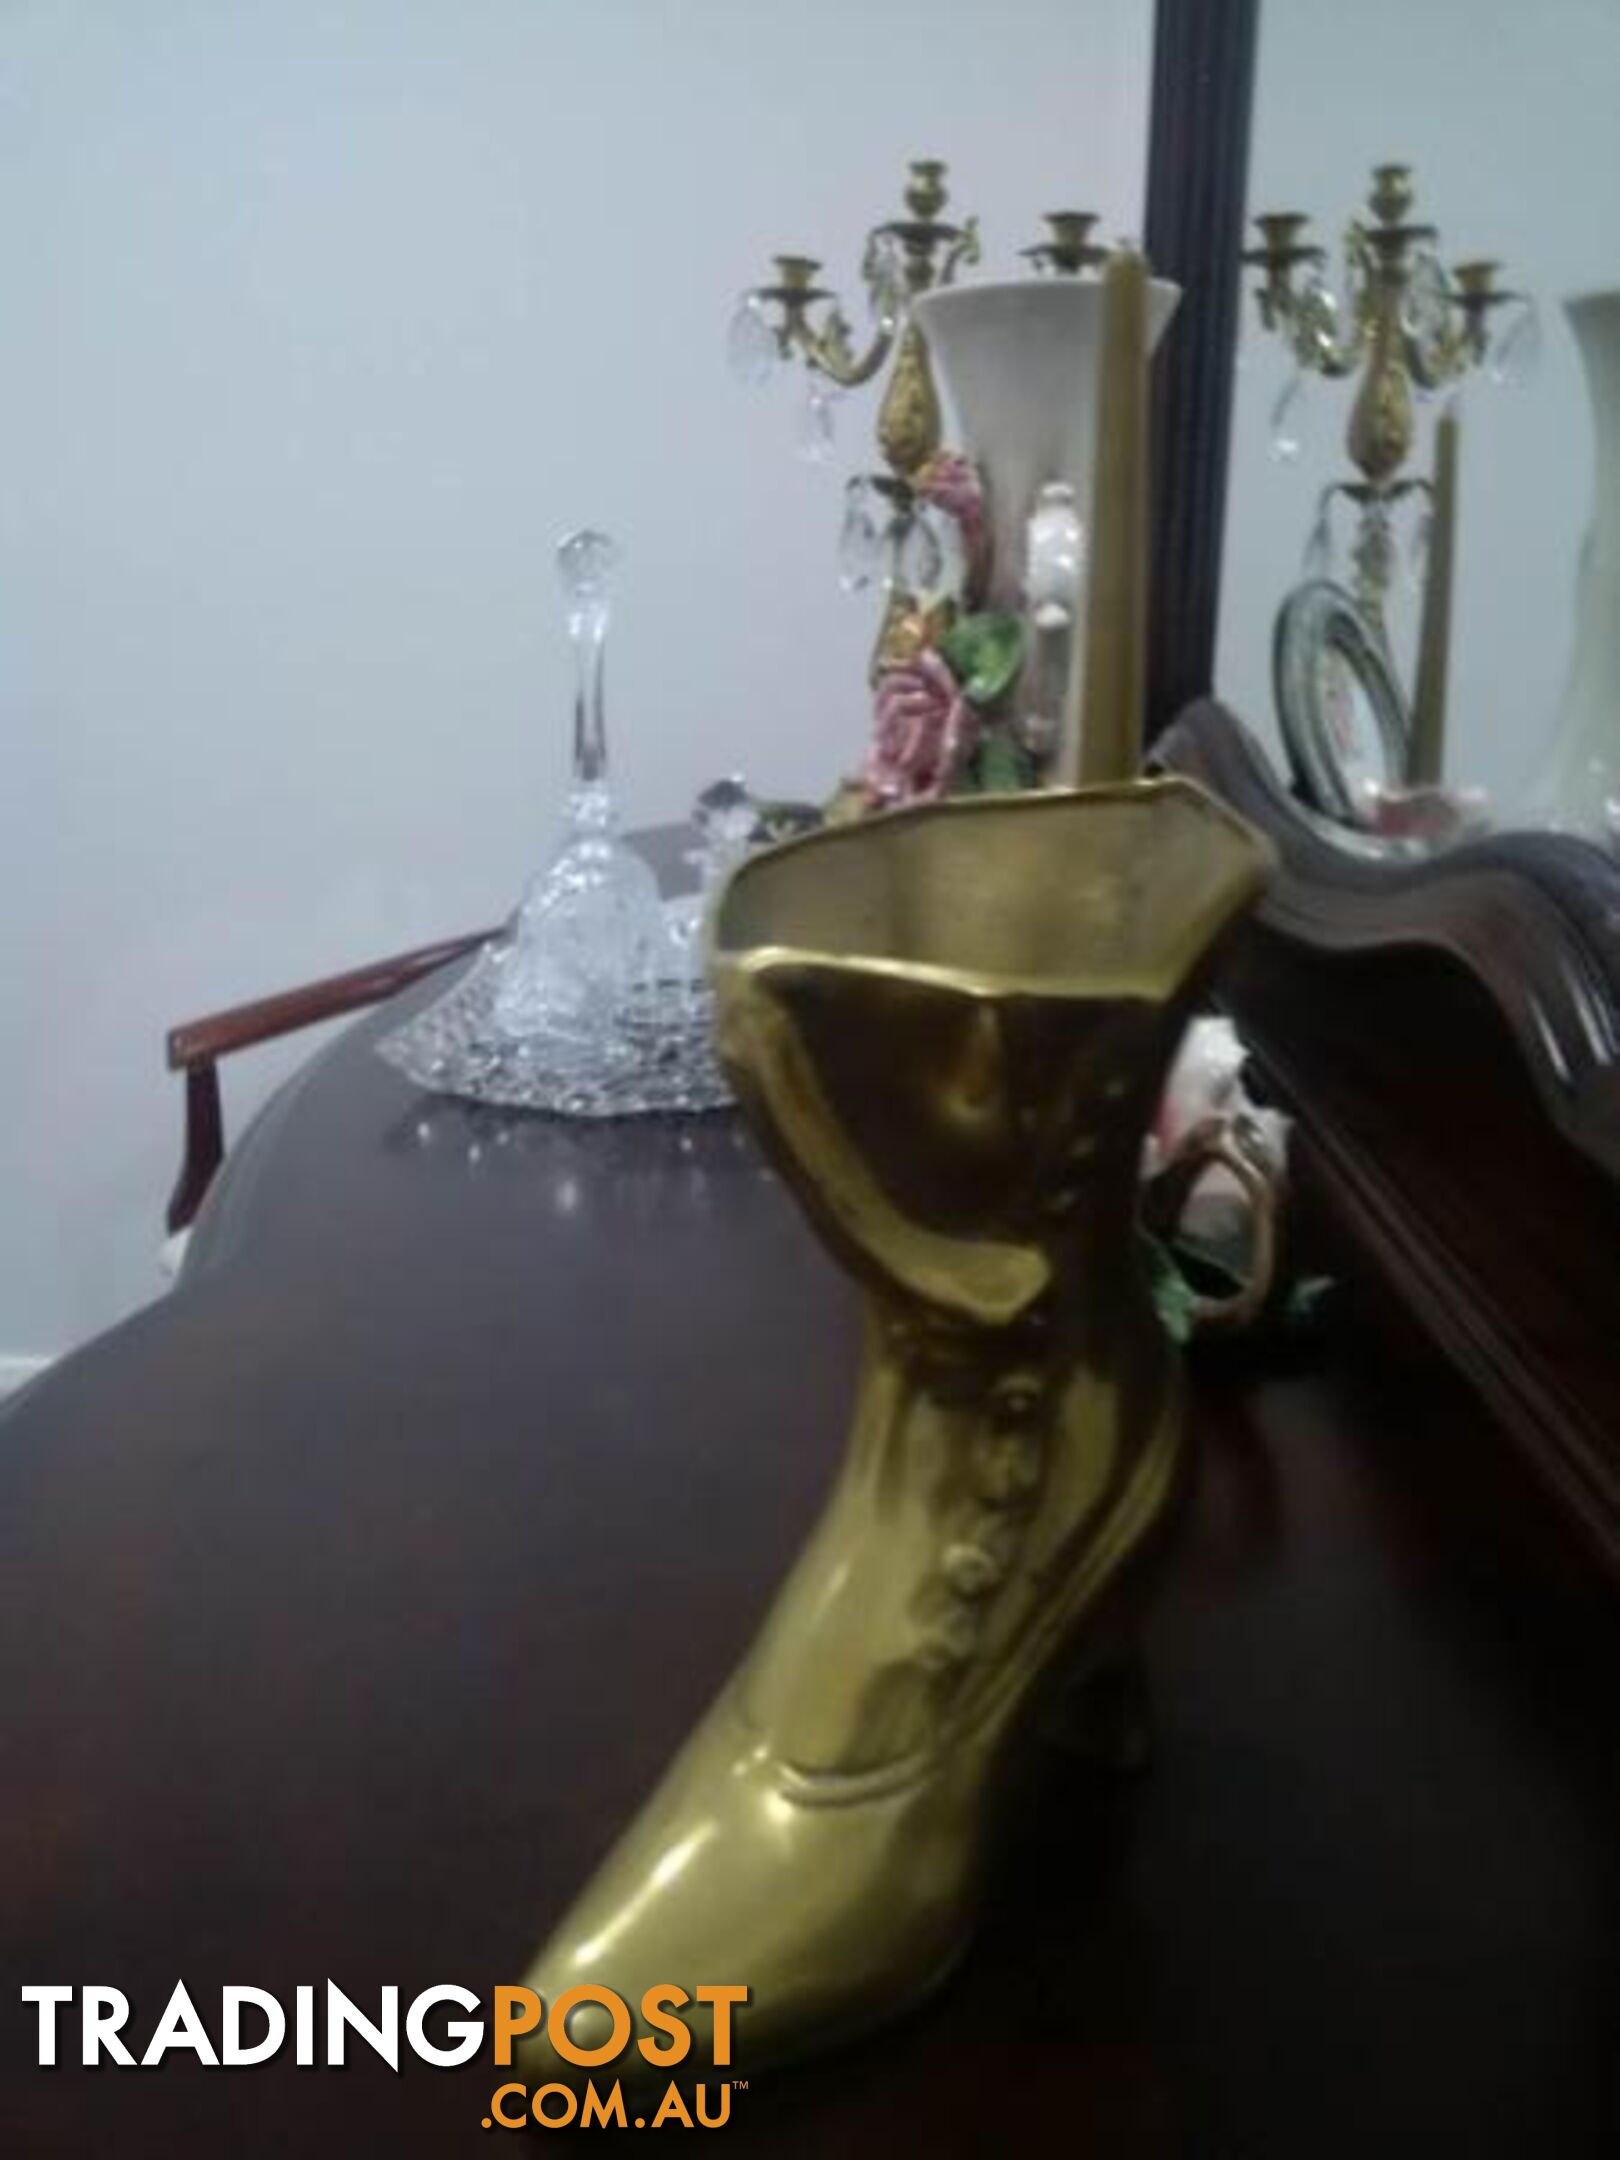 Candleholders / Candelabra - Crystal / Glass / Brass. Ornaments